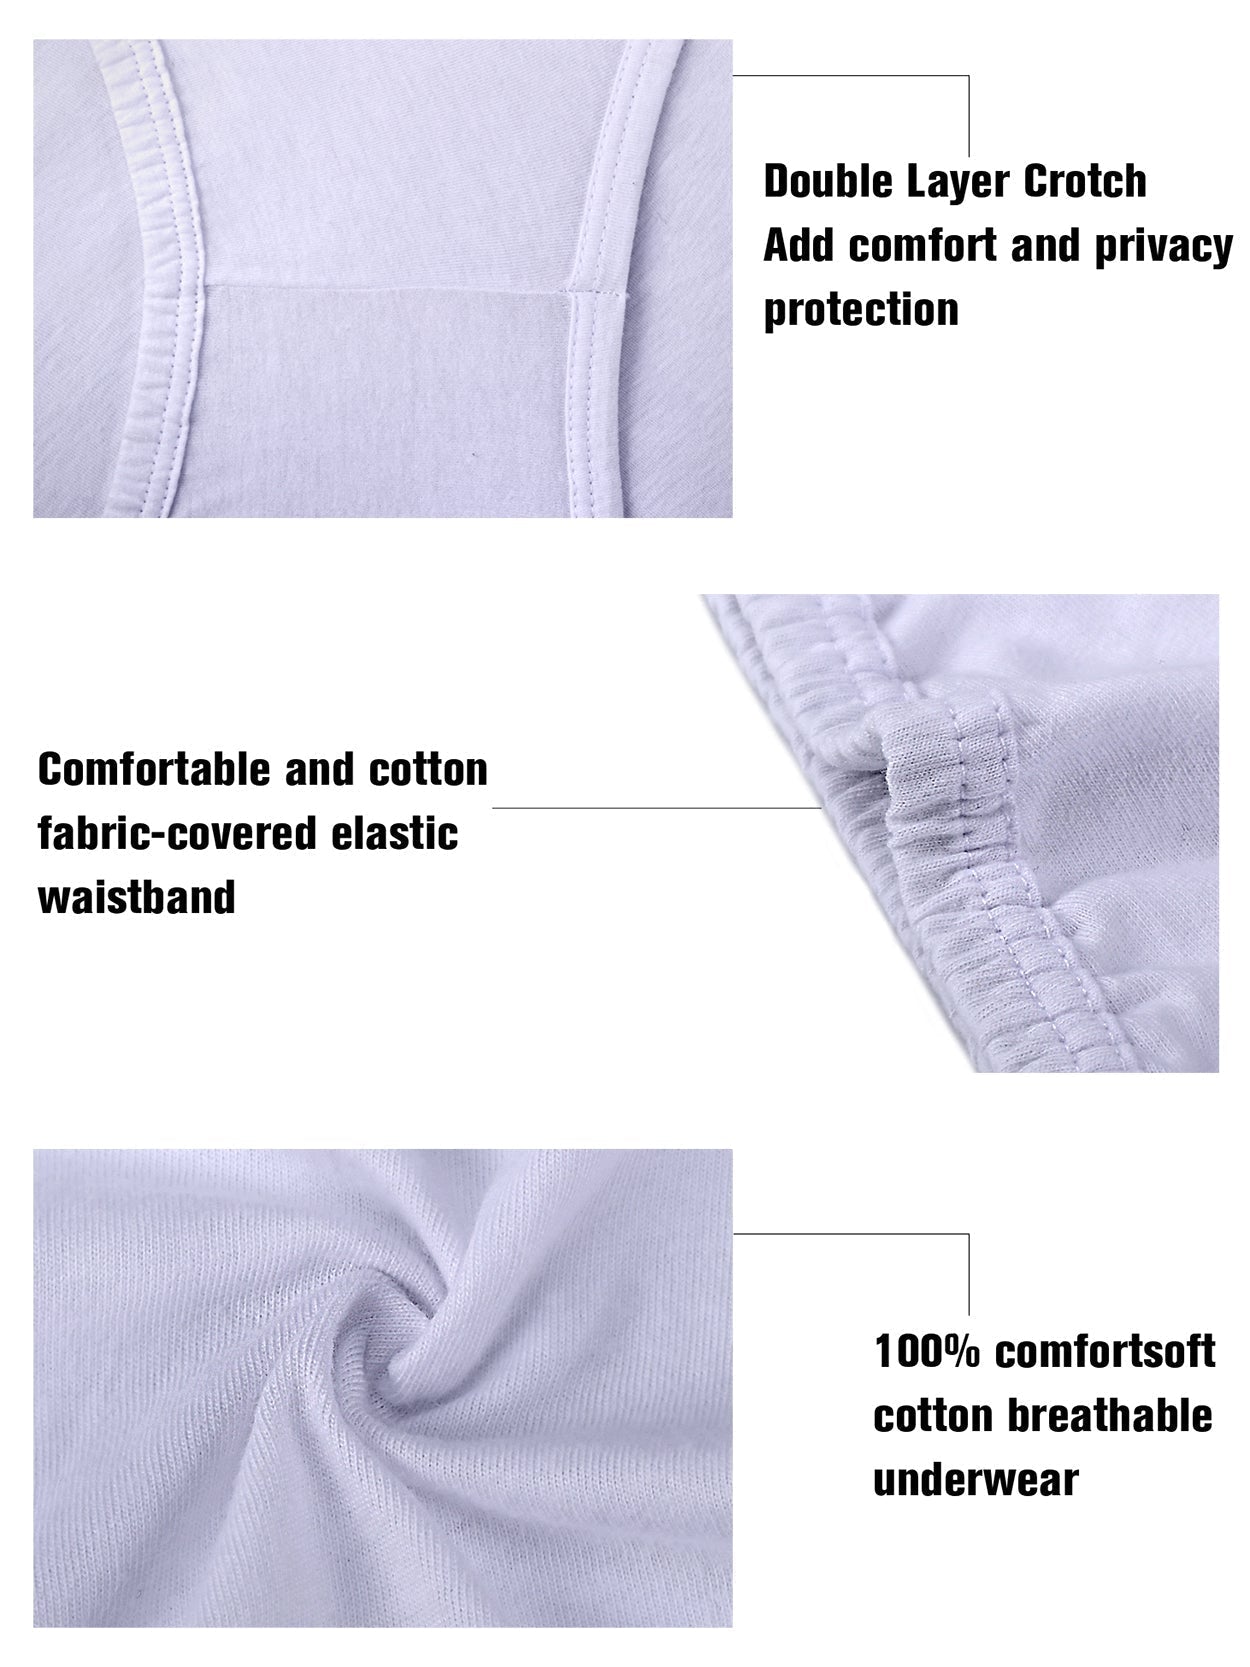 Comfort Soft Cotton Plus Size Underwear High-Cut Brief Panty 3